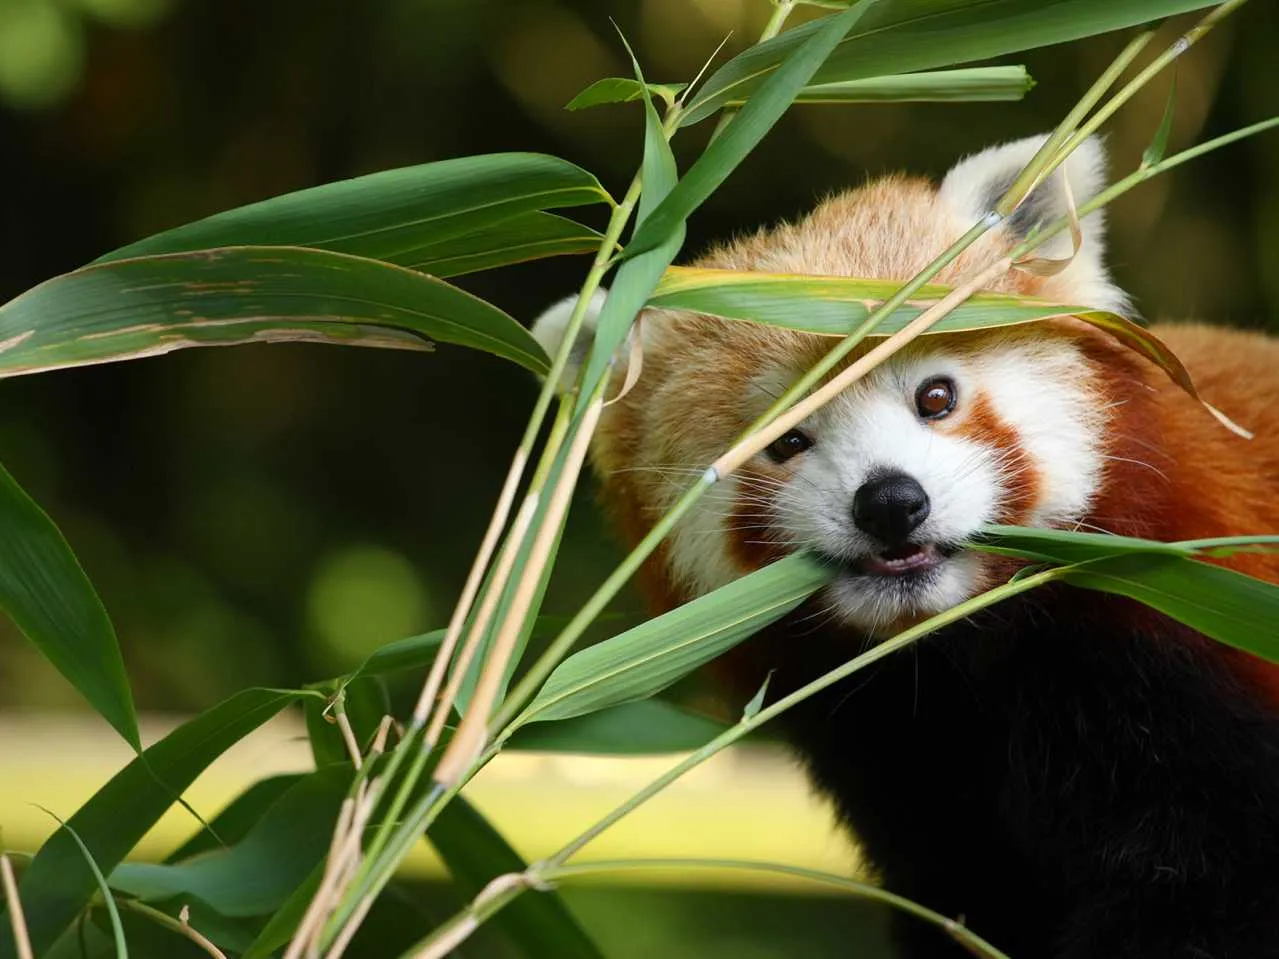 Red Panda eating Bamboo leaves